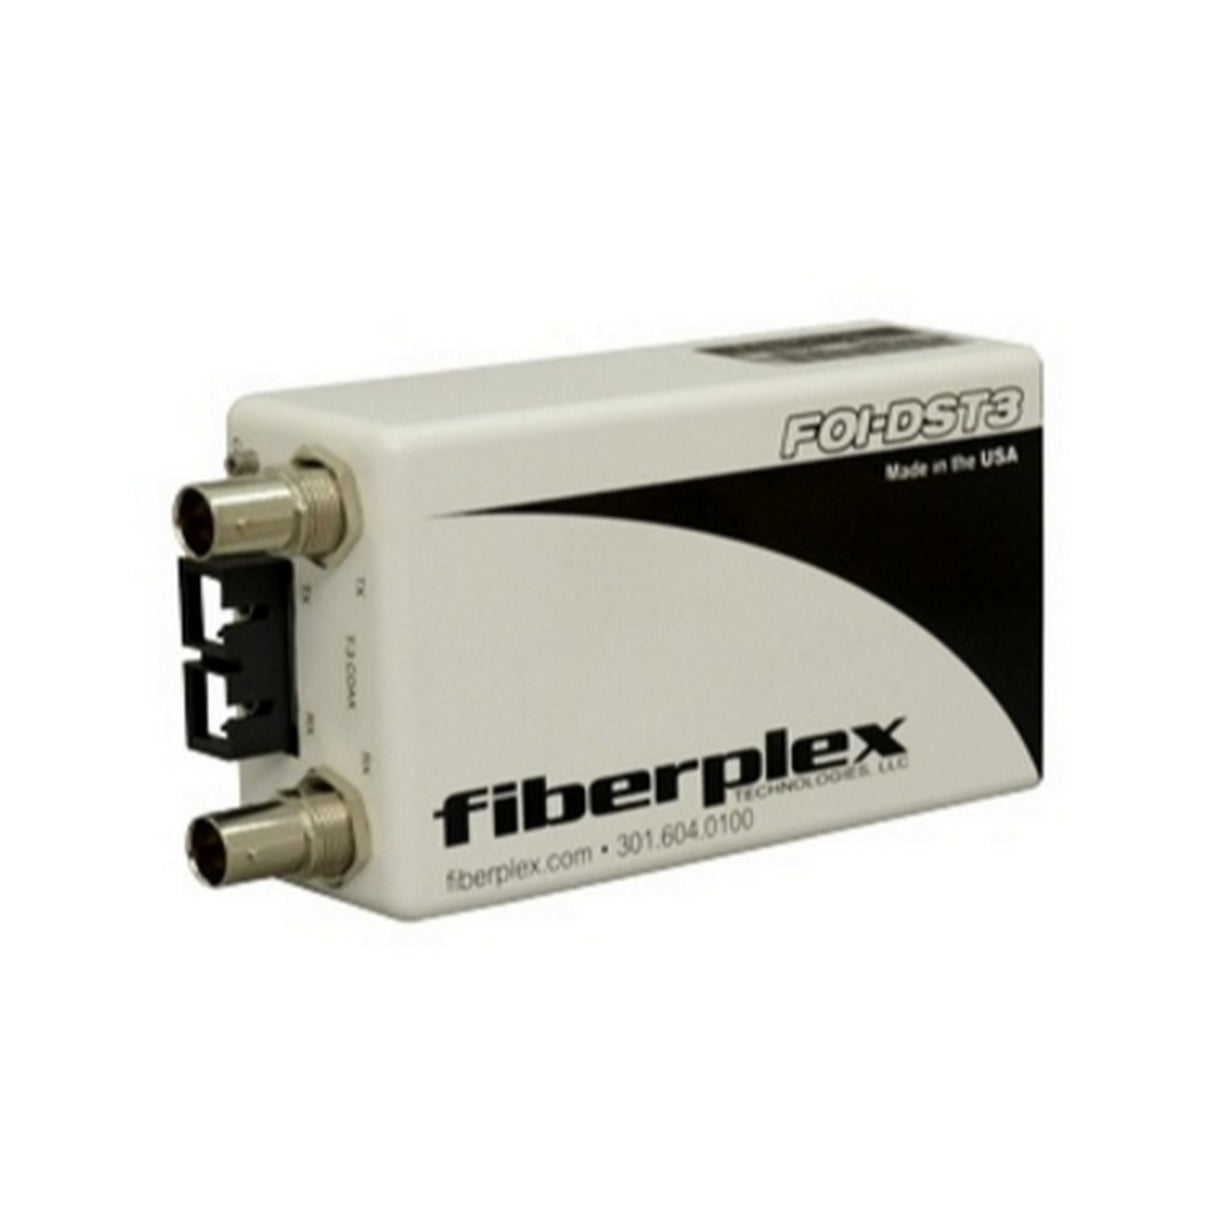 fiberplex FOI-DST3-FC | Isolator for T3 or DS3